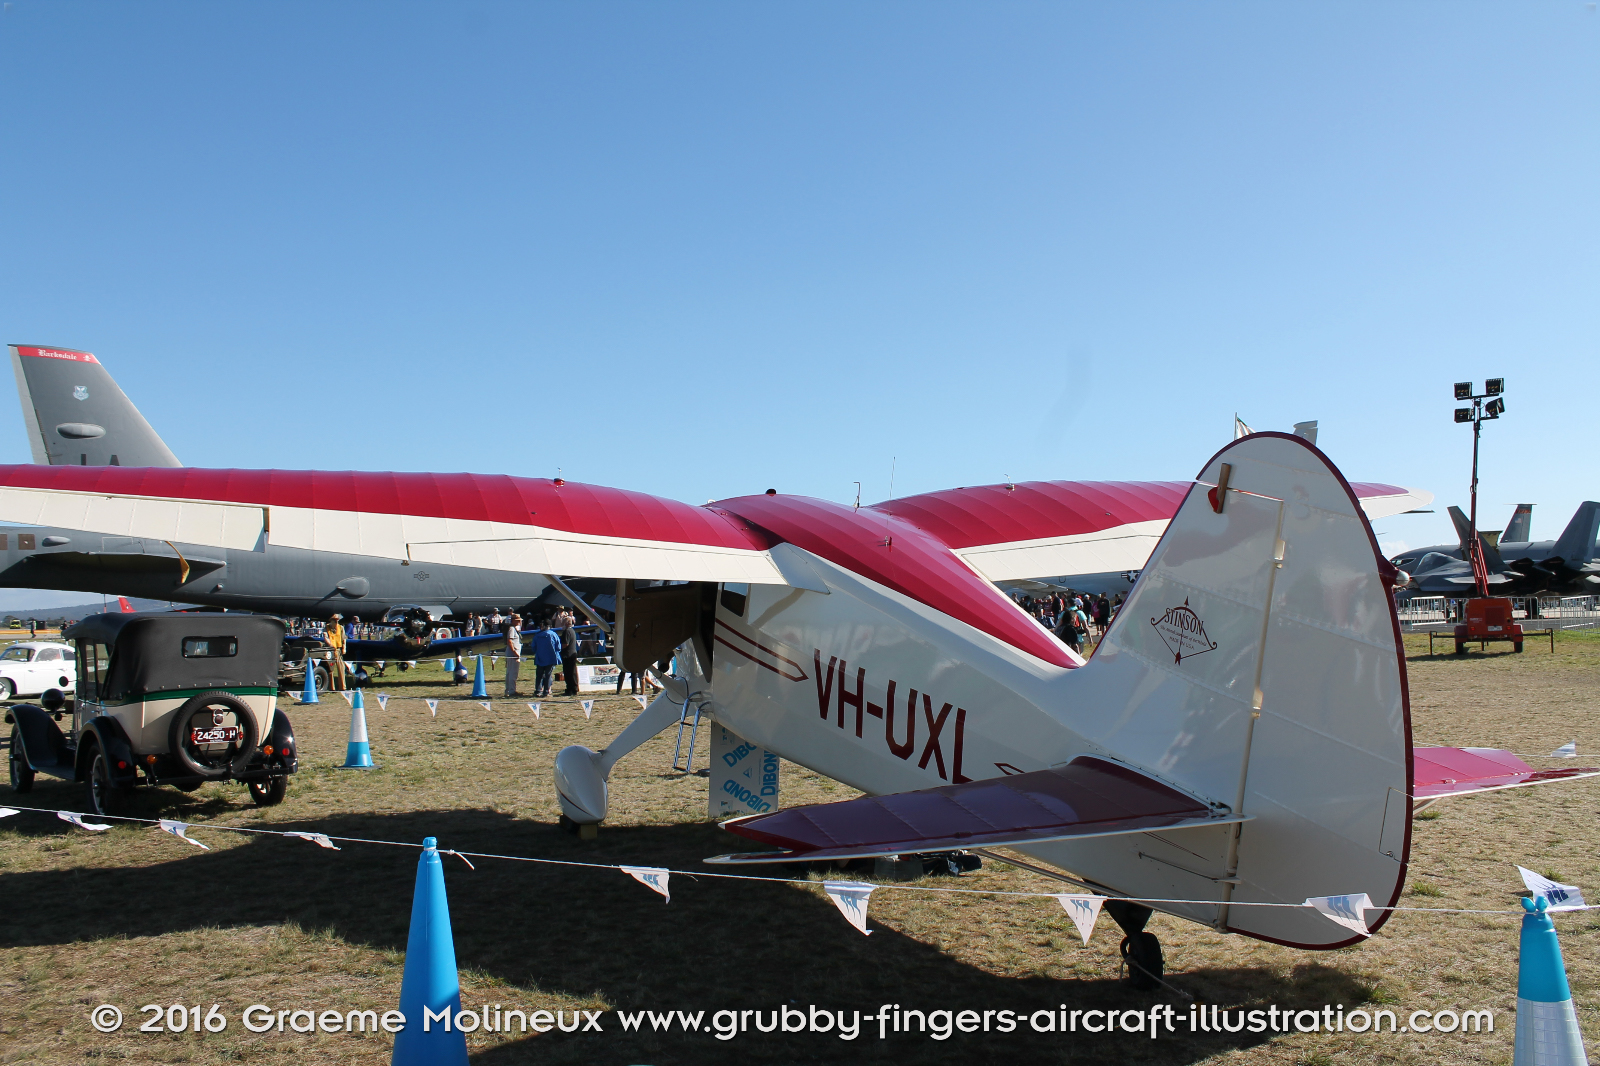 STINSON_Reliant_VH-UXL_Avalon_Airshow_2015_20_GrubbyFingers